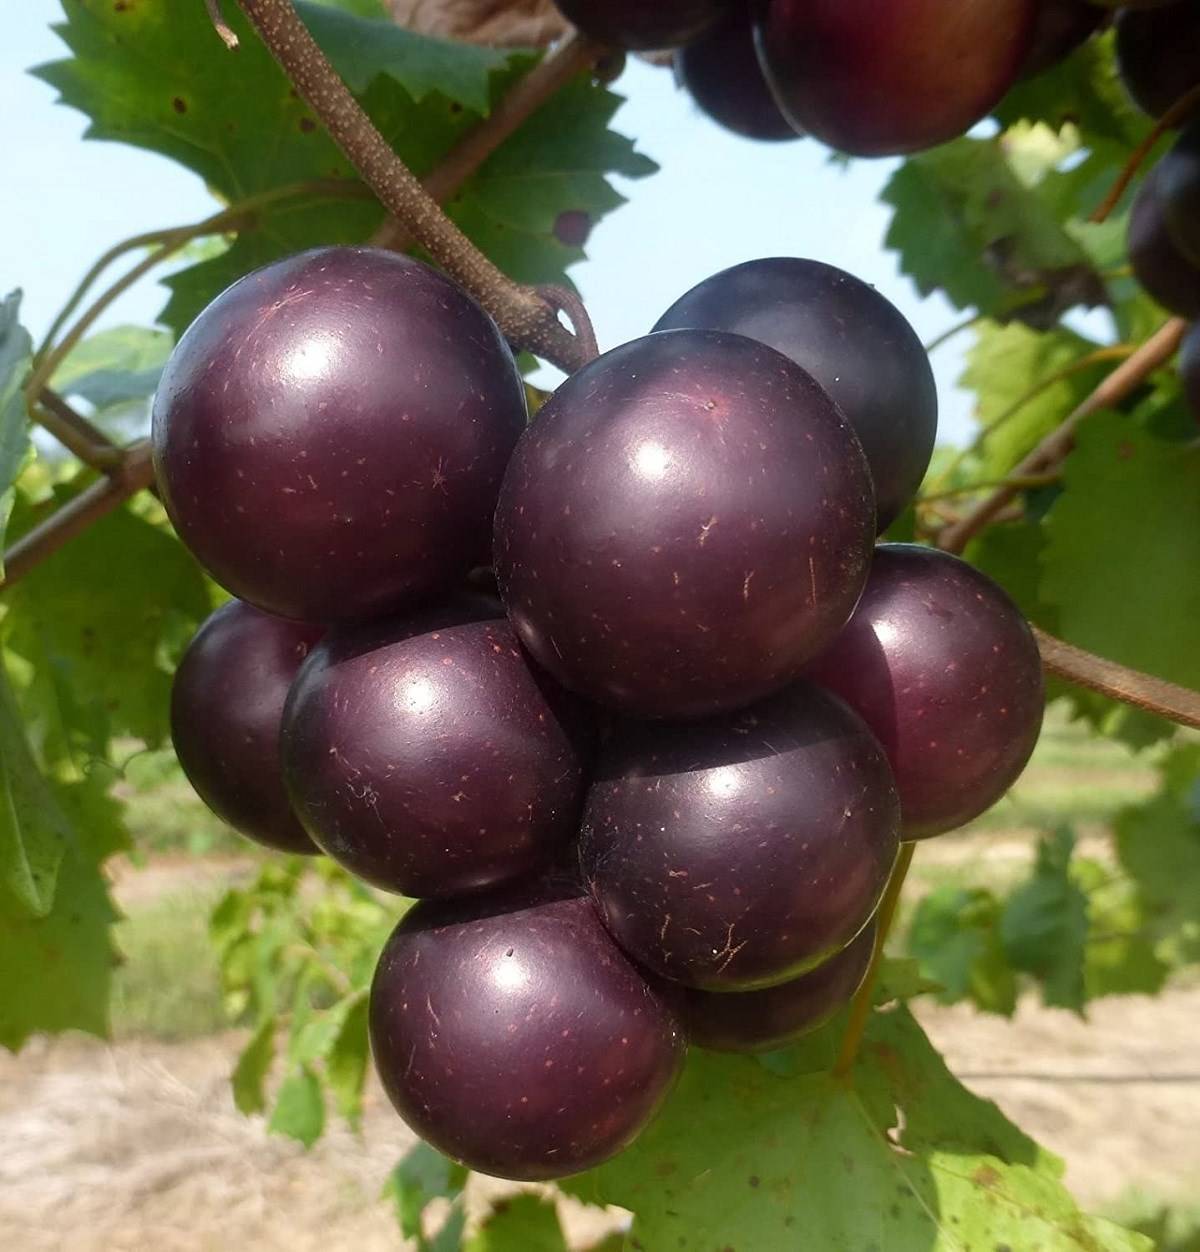 Muscadine Grapes